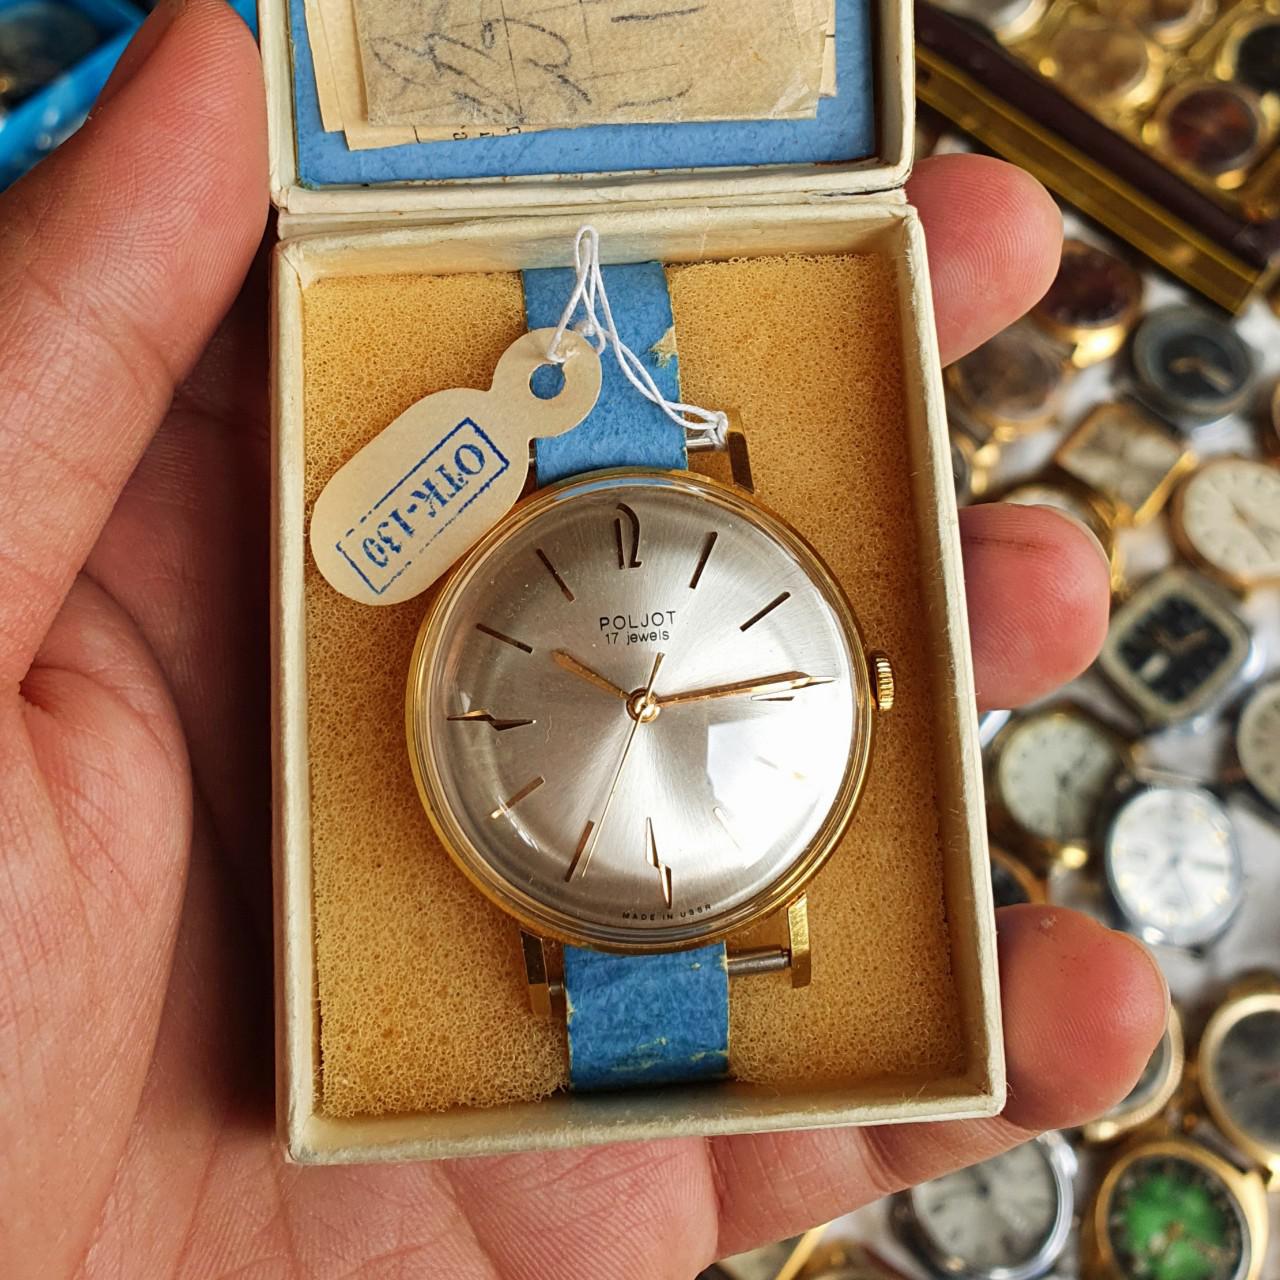 Đồng hồ Poljot 16 jewels - Chiếc đồng hồ Poljot bát úp huyền thoại